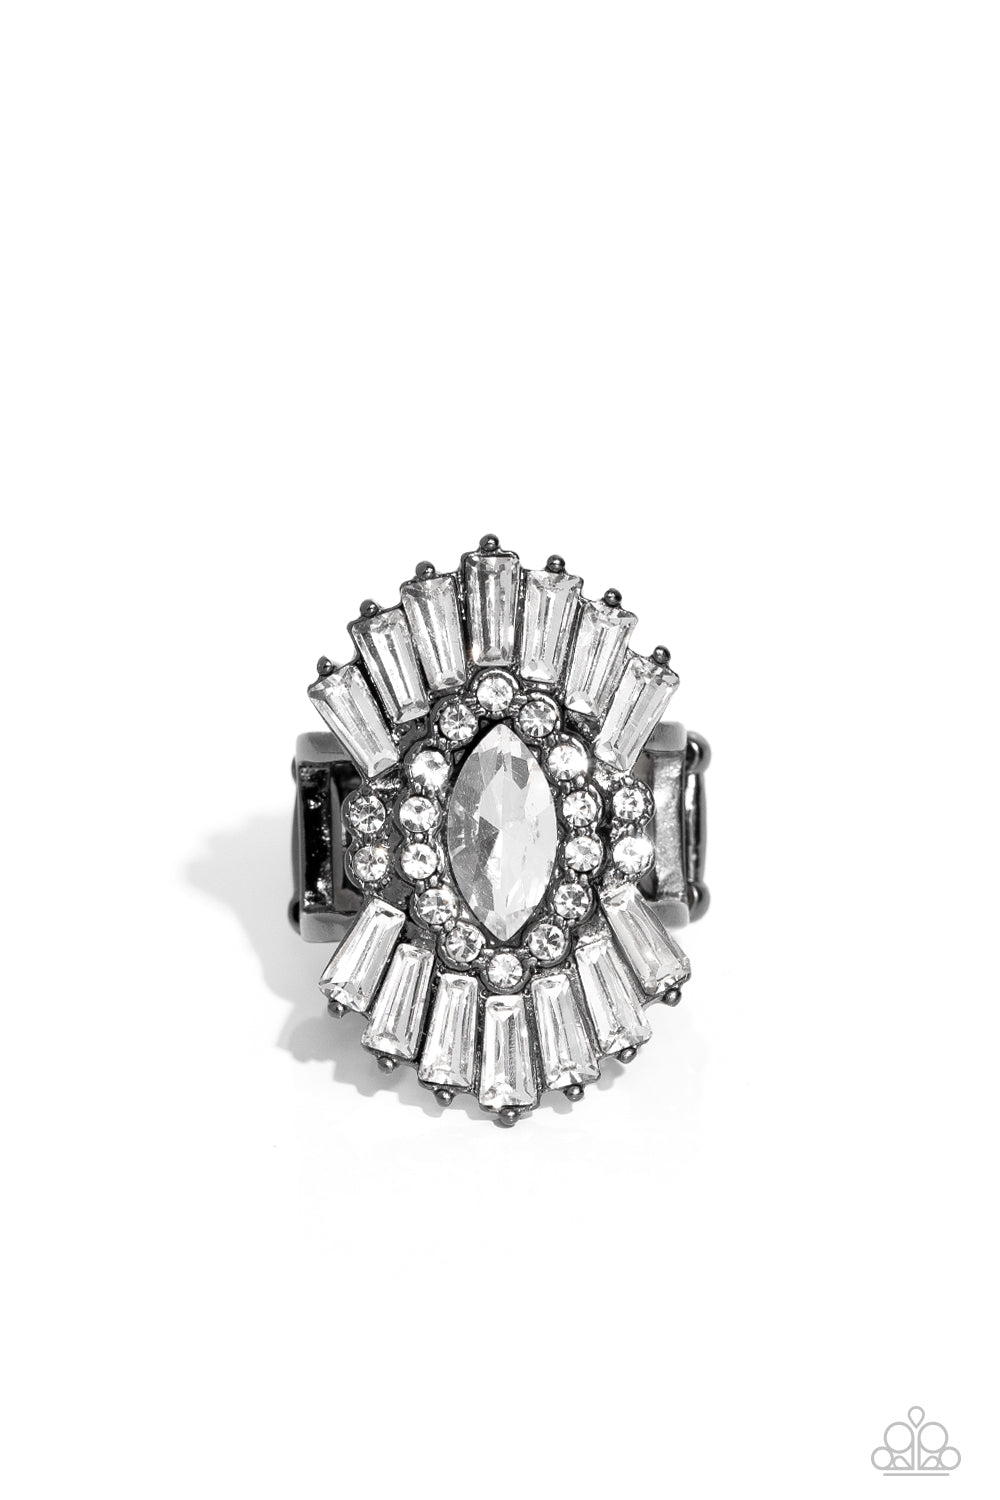 Daringly Deco Gunmetal Black & White Rhinestone Ring - Paparazzi Accessories- lightbox - CarasShop.com - $5 Jewelry by Cara Jewels